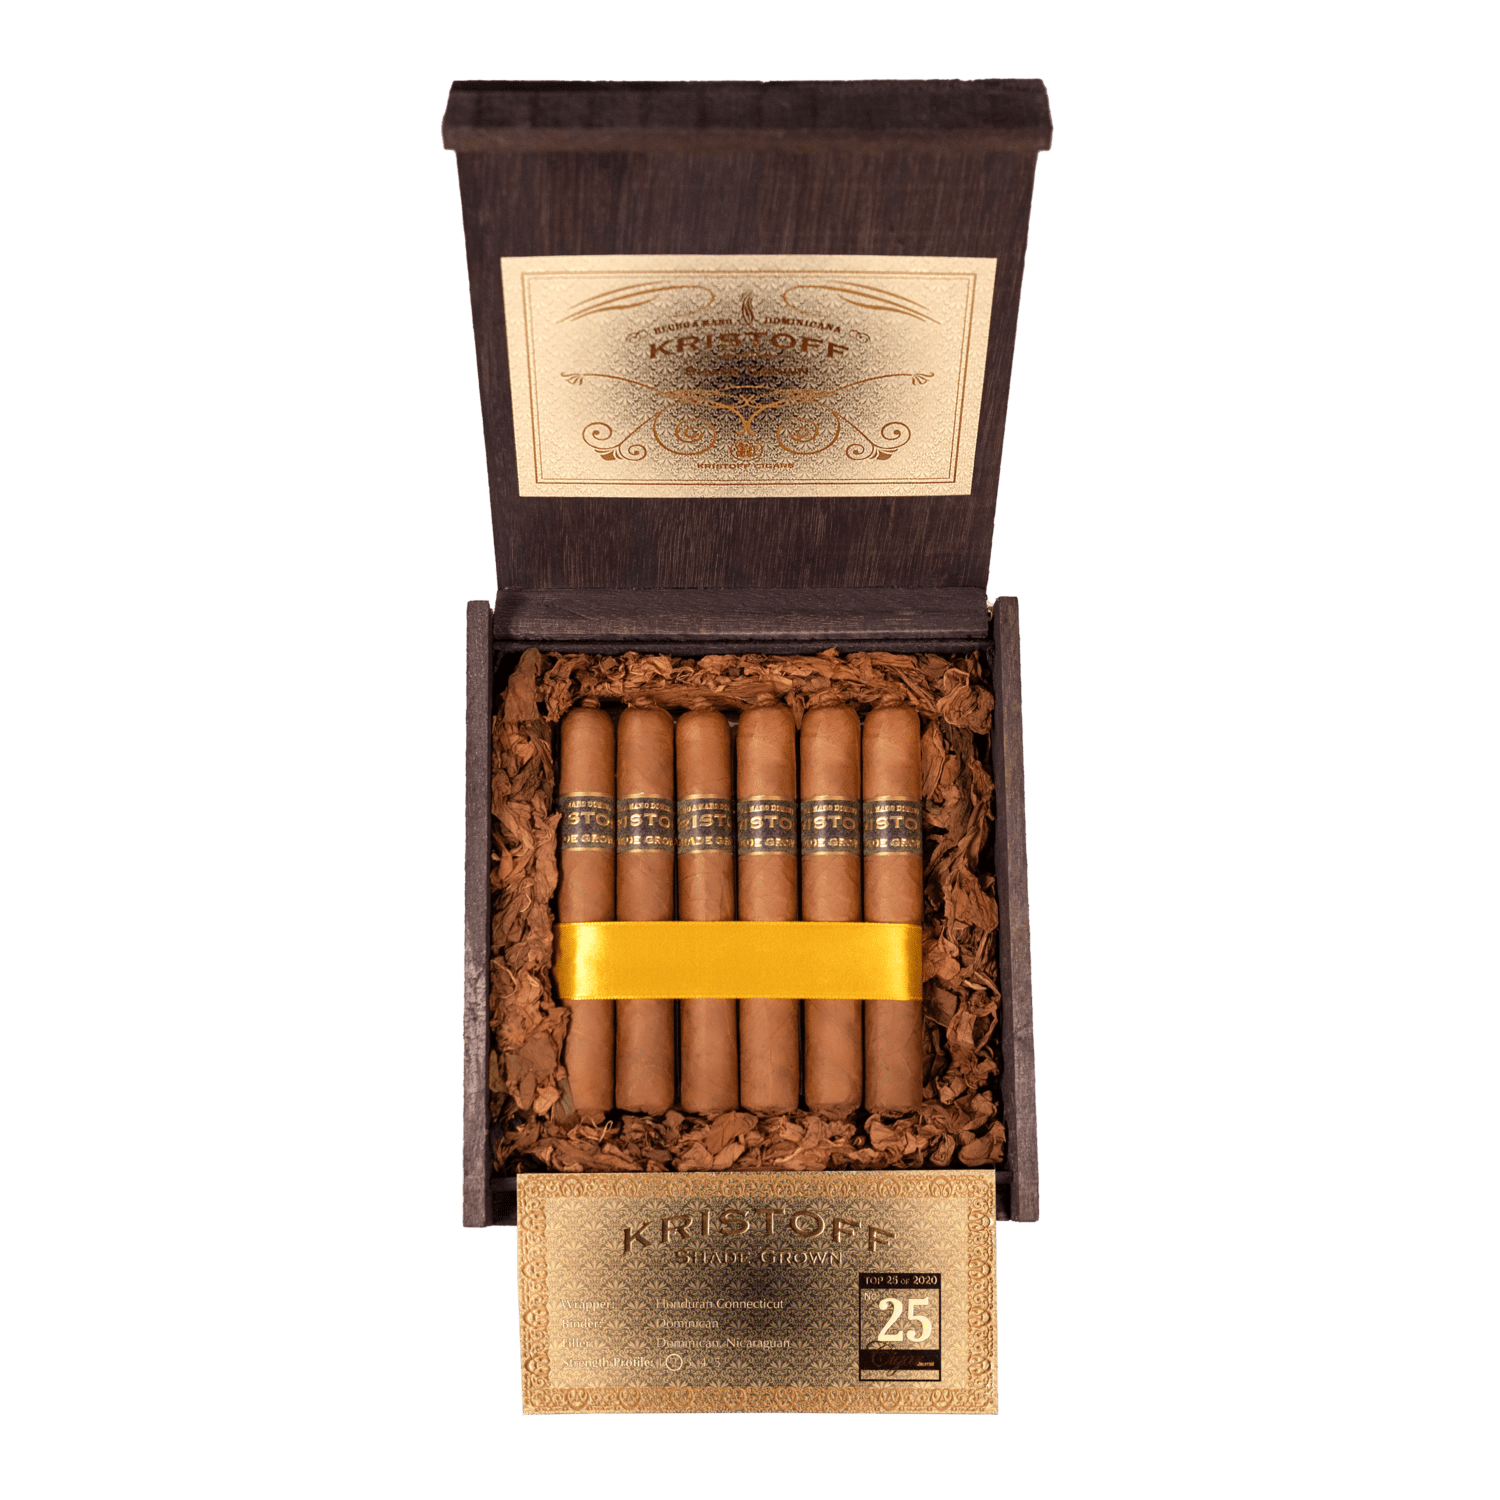 Kristoff Cigars: Shade Grown Highly Rated Cigar